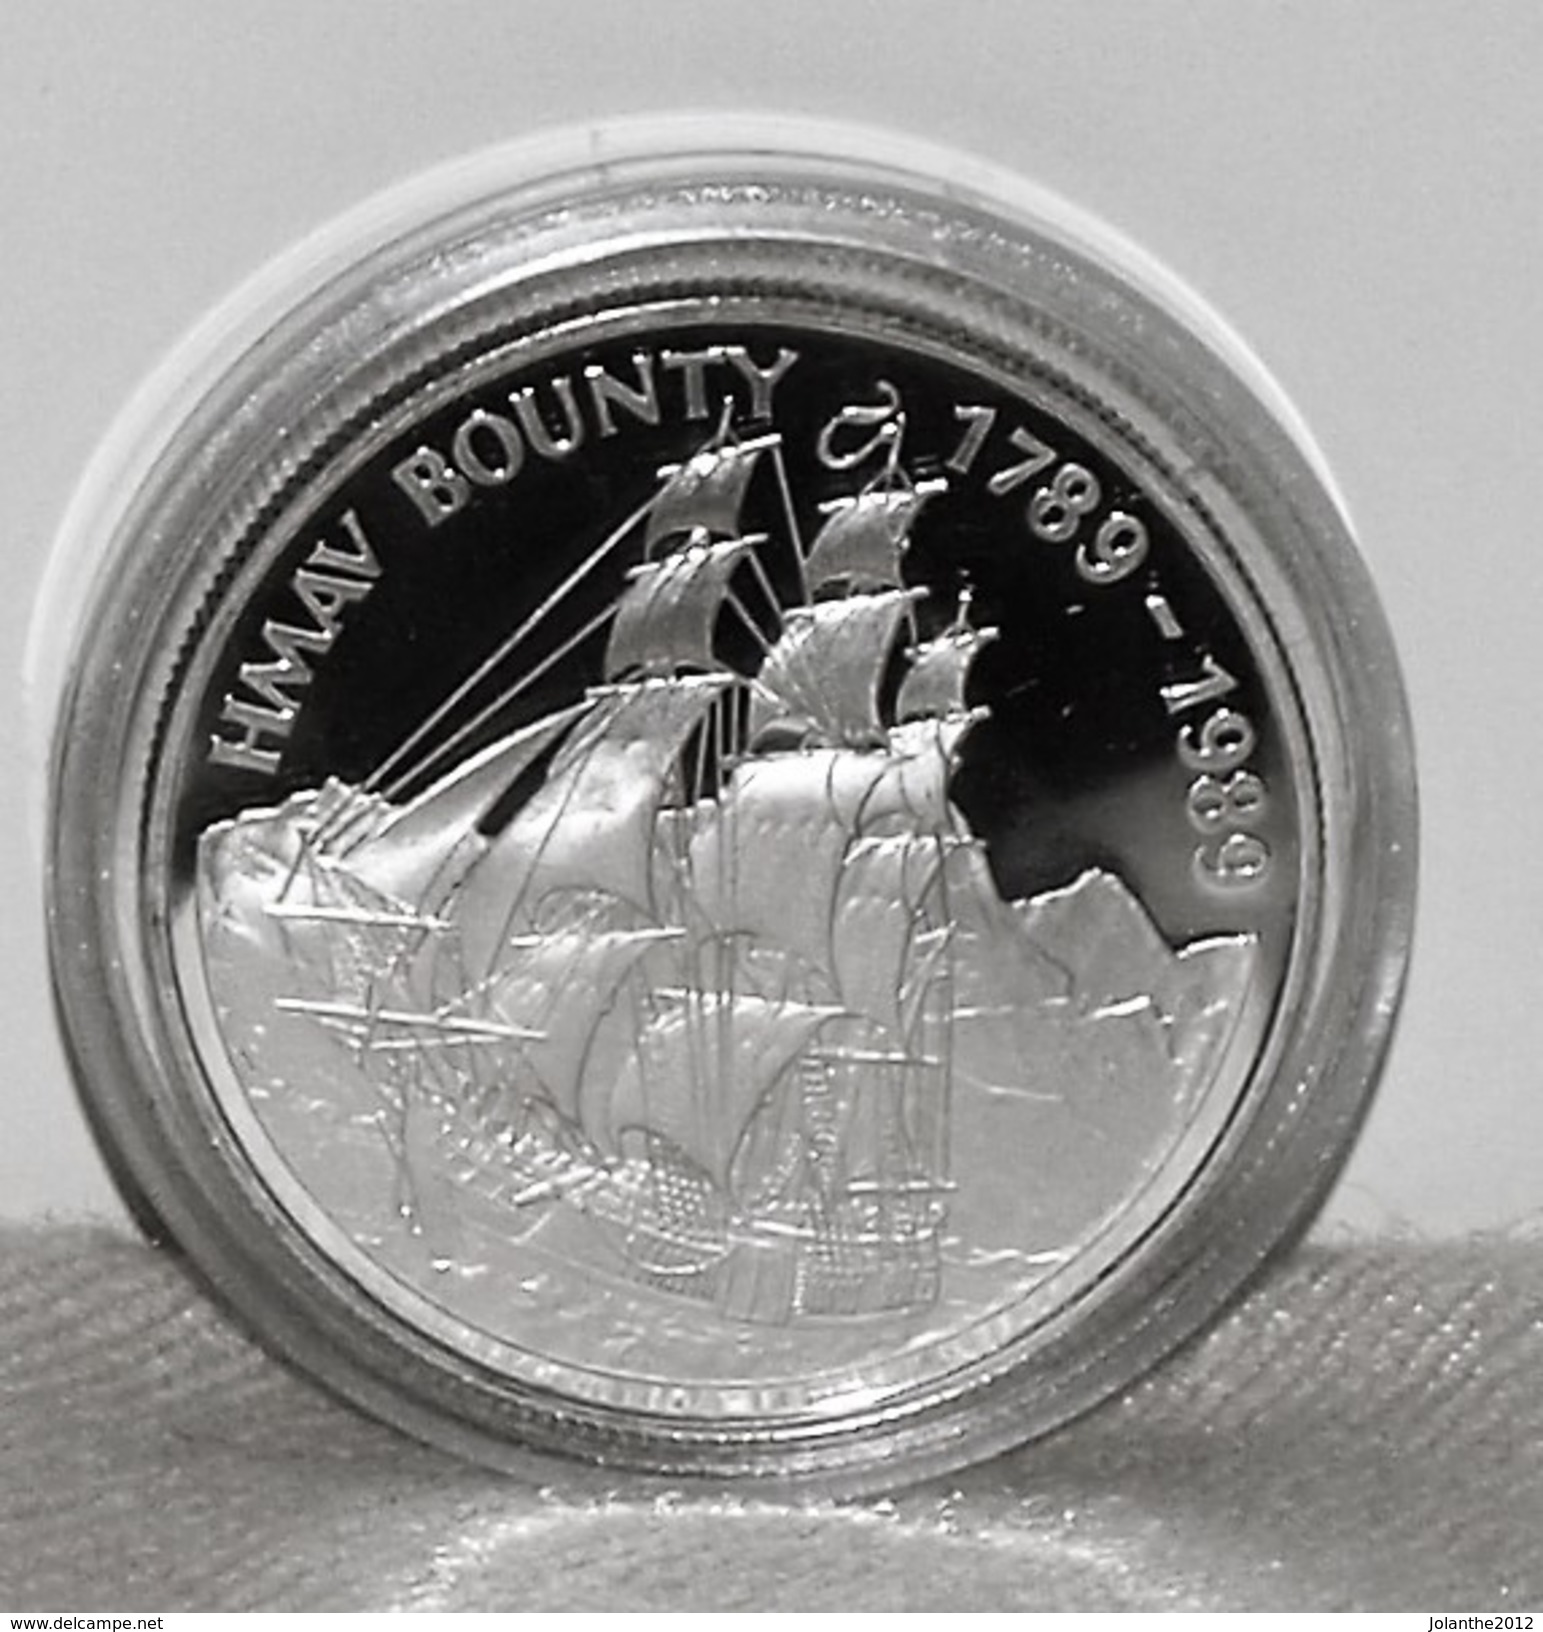 Münze/Coin Silber/Ag 925 Pitcairn Islands, Meuterei Auf Der Bounty/Mutiny On Ship Bounty 1789-1989, 1 Dollar - Pitcairn